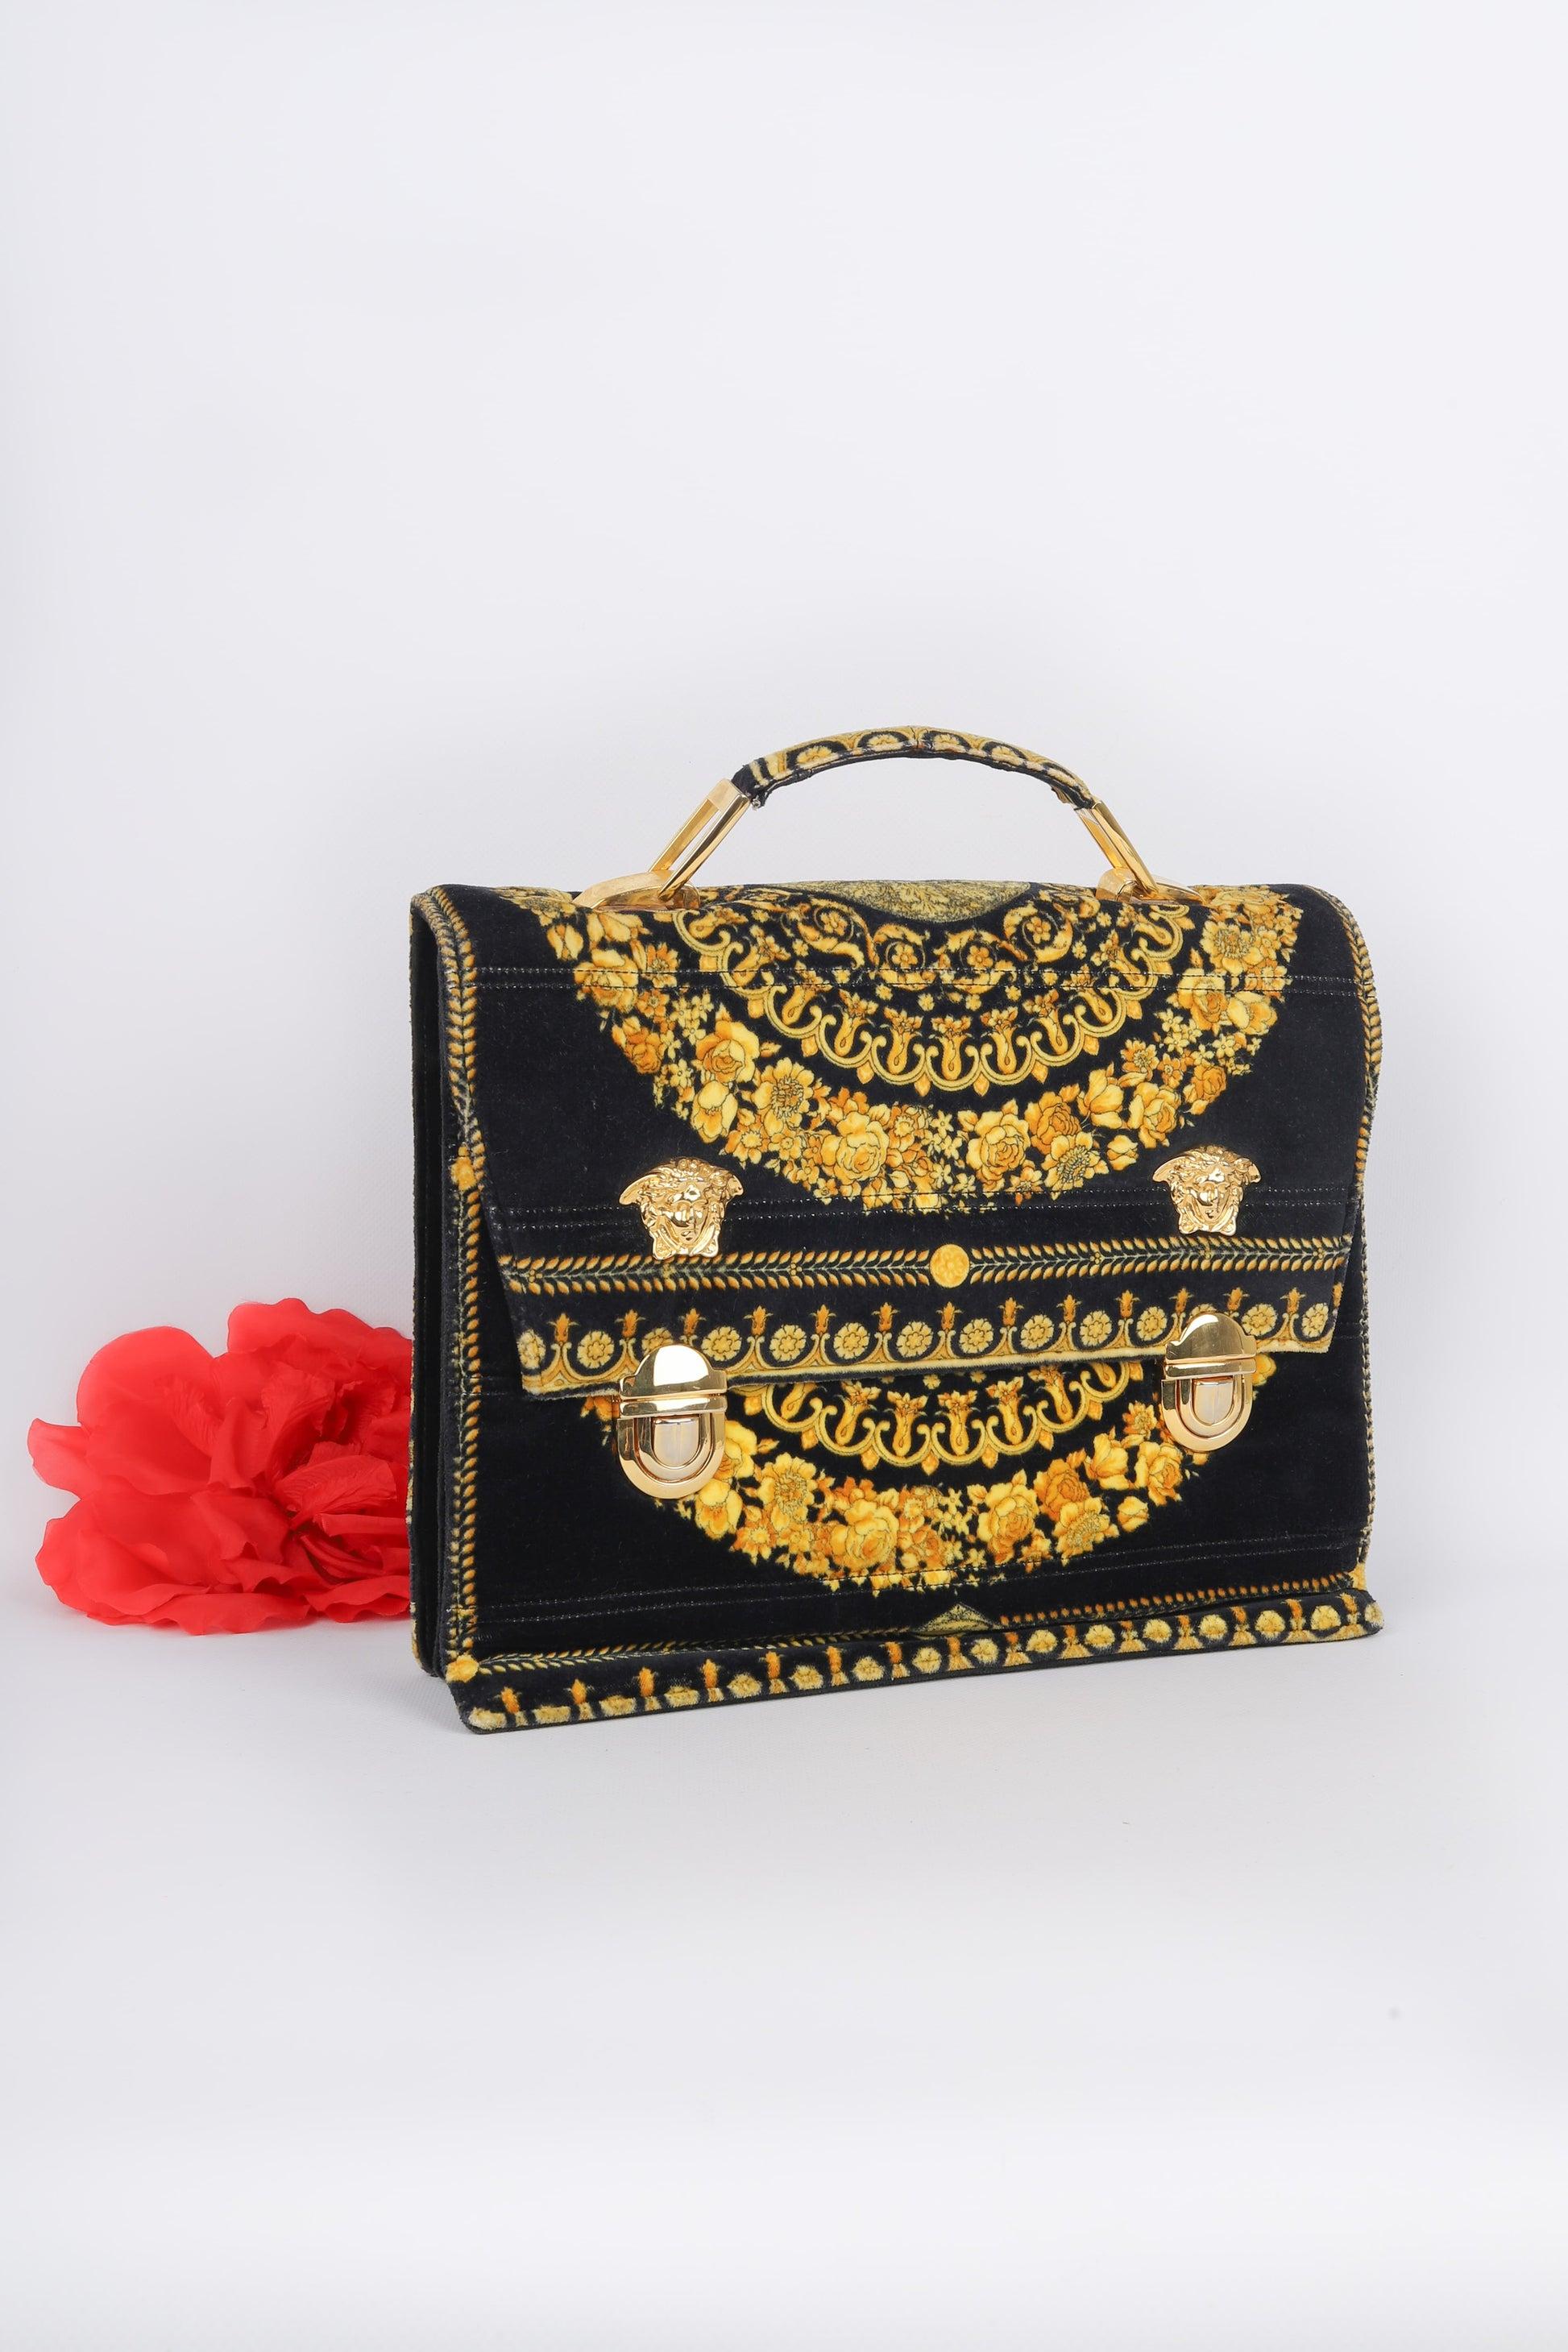 Gianni Versace Black Velvet Bag with Golden Patterns For Sale 6